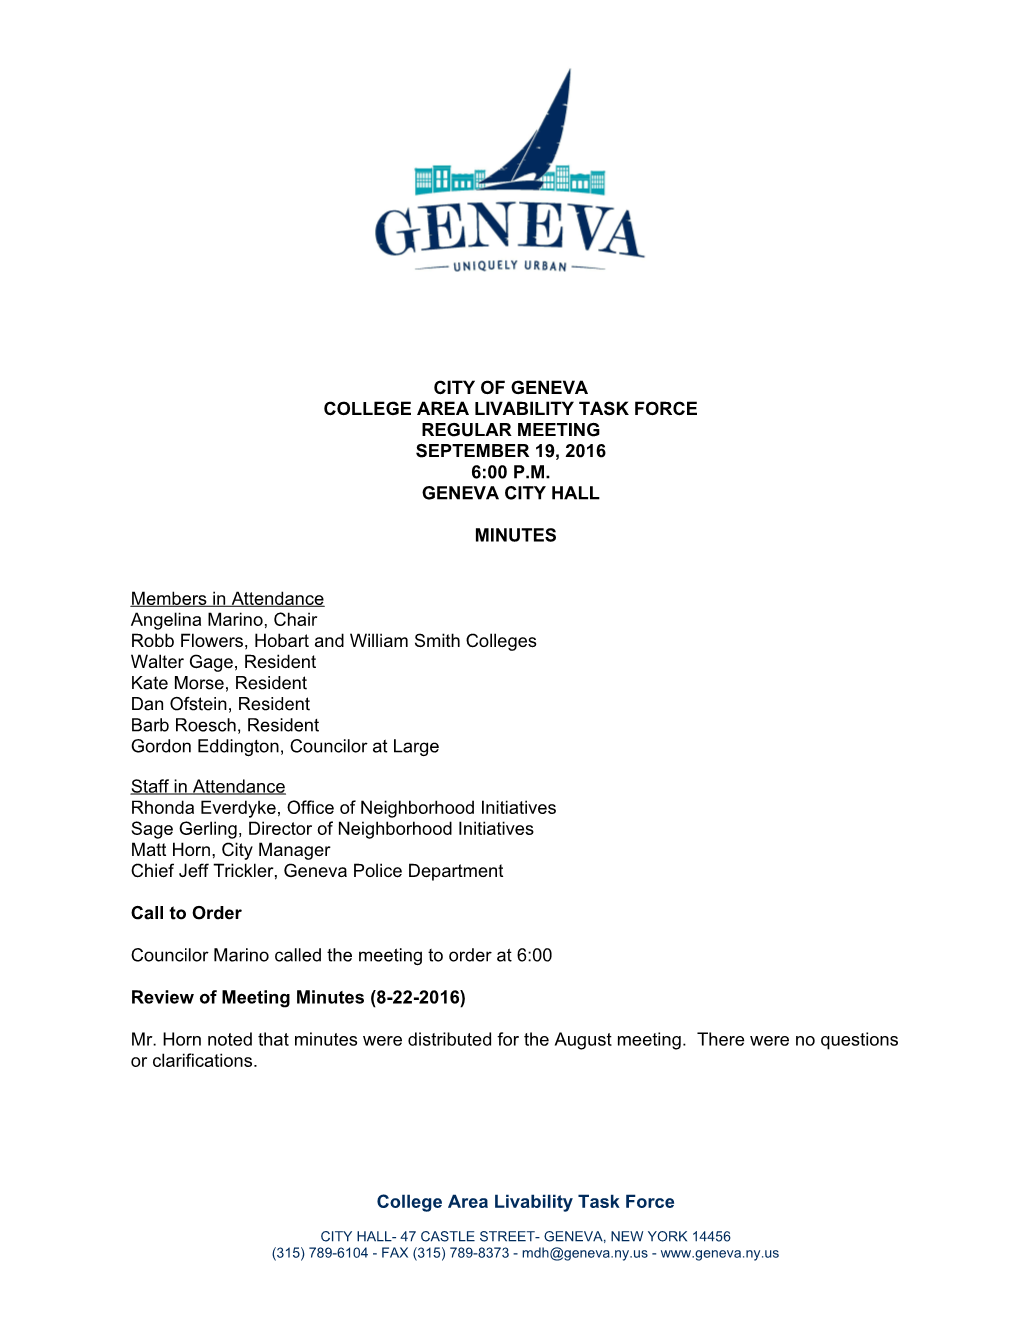 City of Geneva College Area Livability Task Force